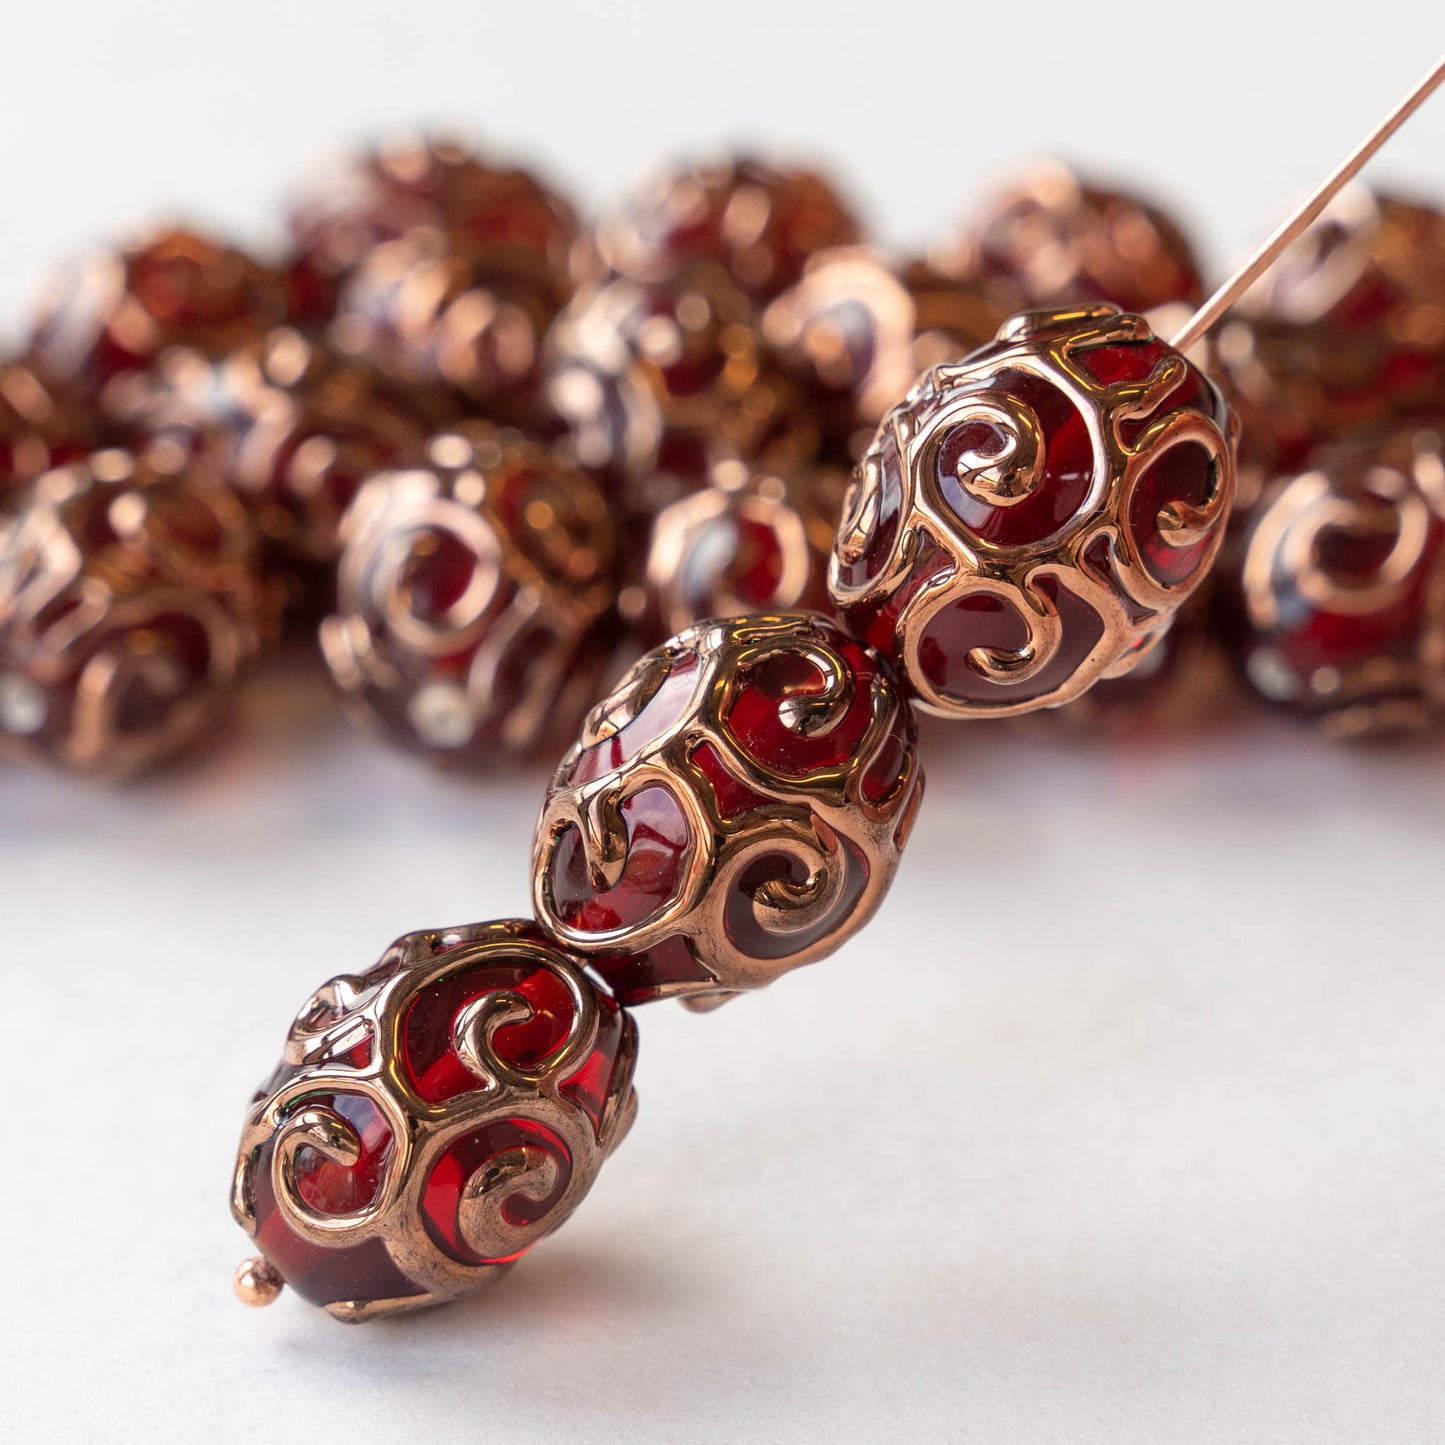 17x14mm Handmade Lampwork Beads - Red - 2, 4 or 8